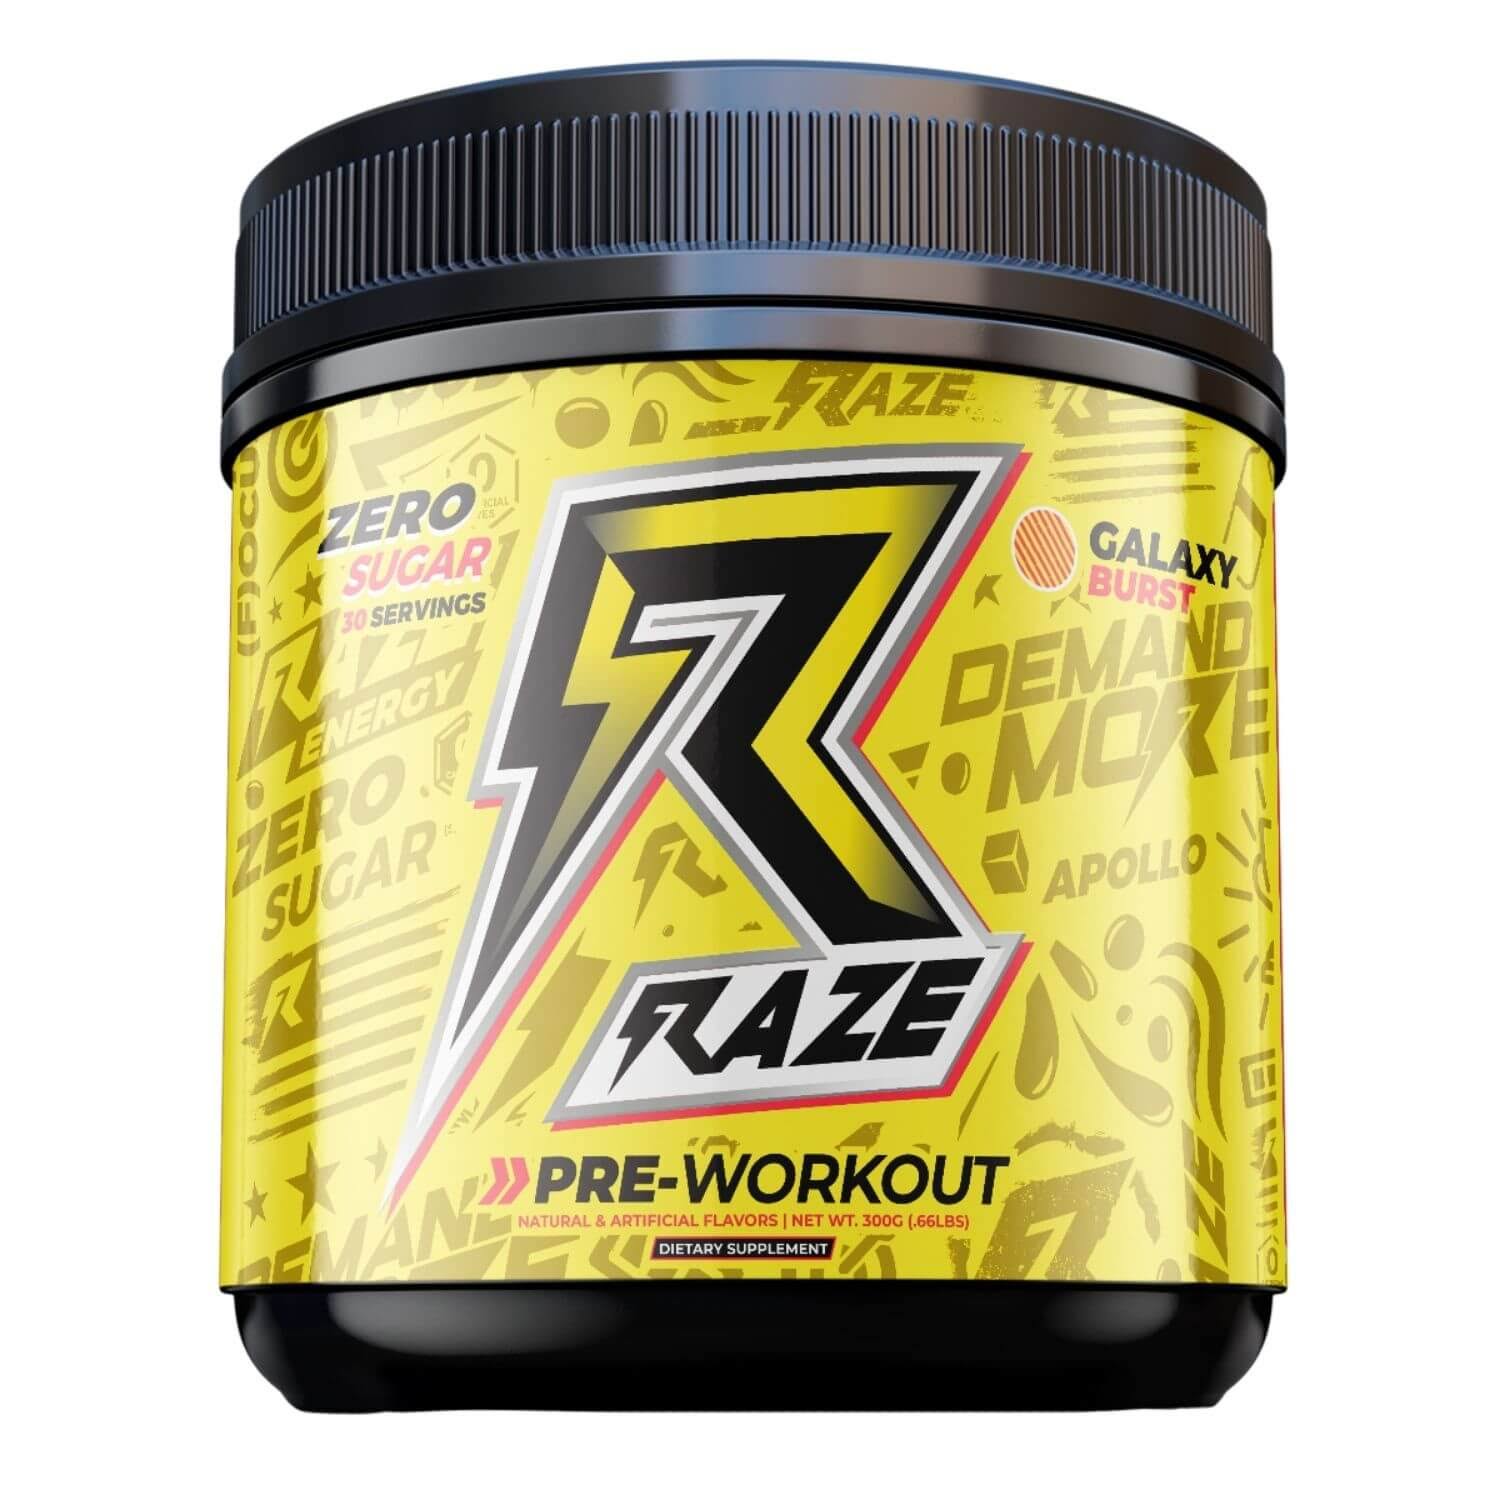 Raze Pre Workout - Galaxy Burst